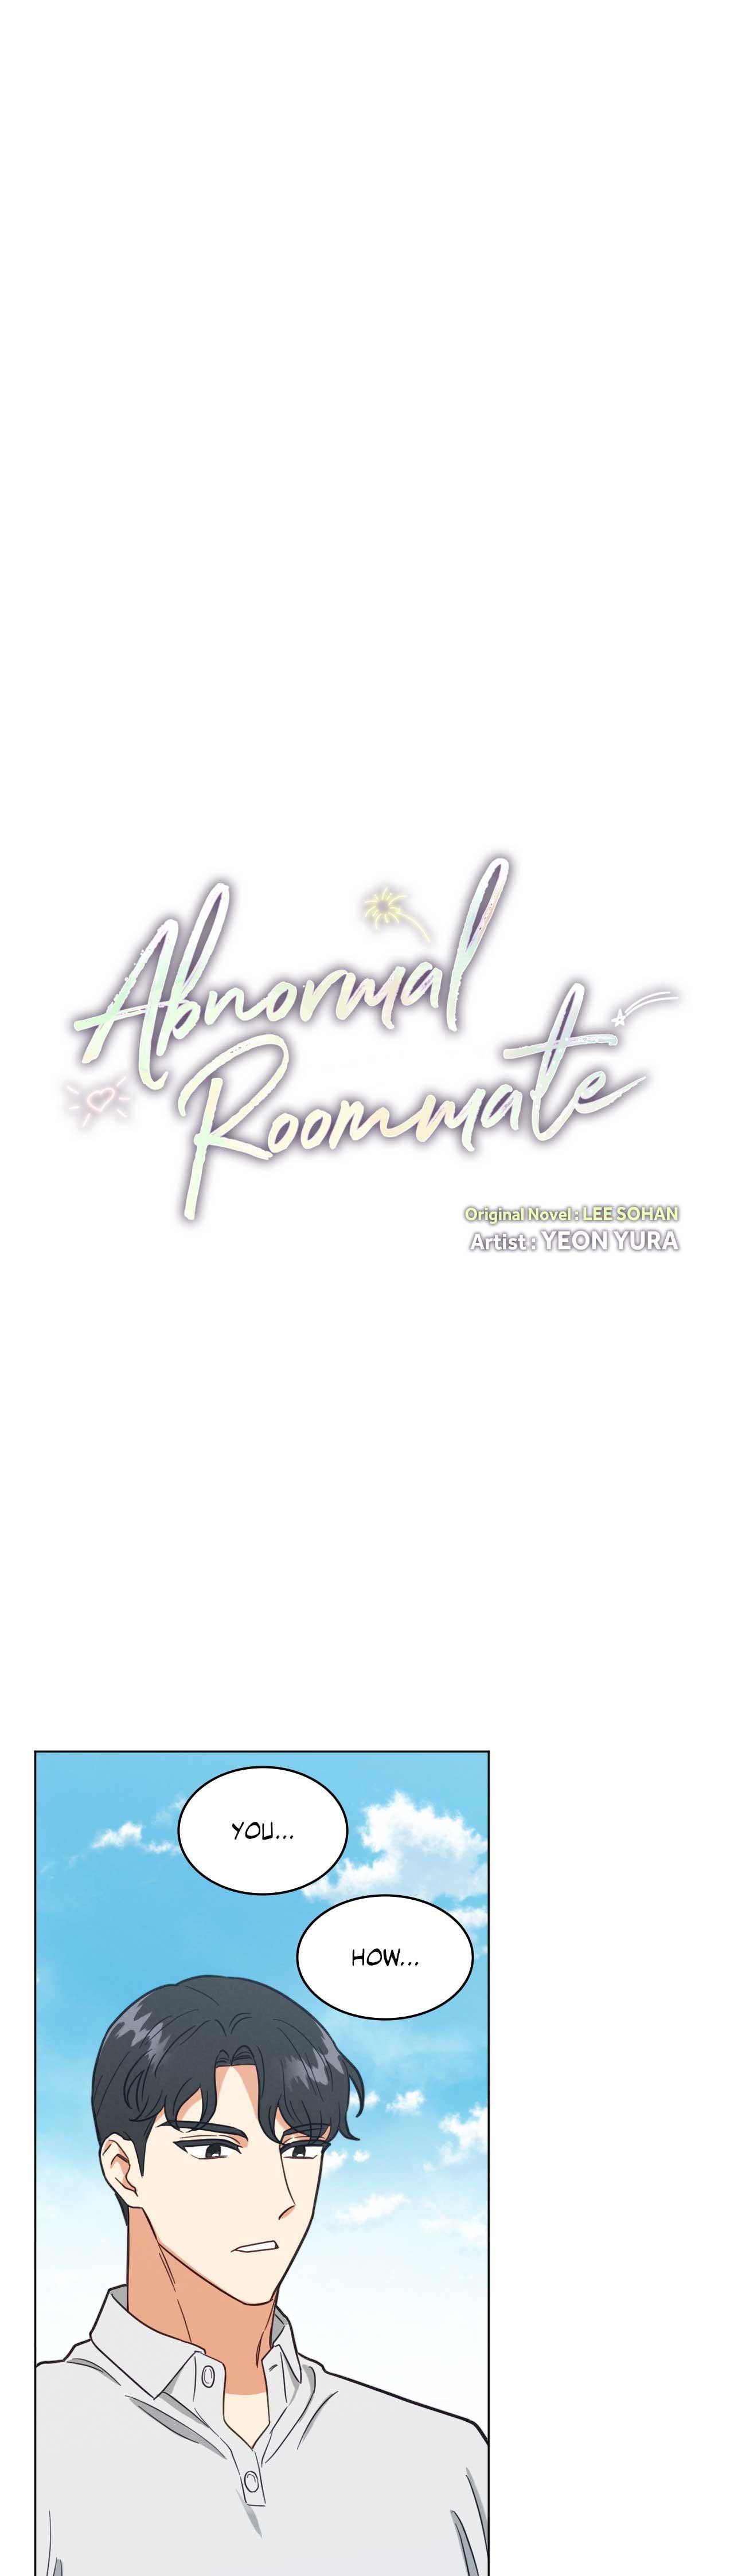 Abnormal Rommate - chapter 47 - #2